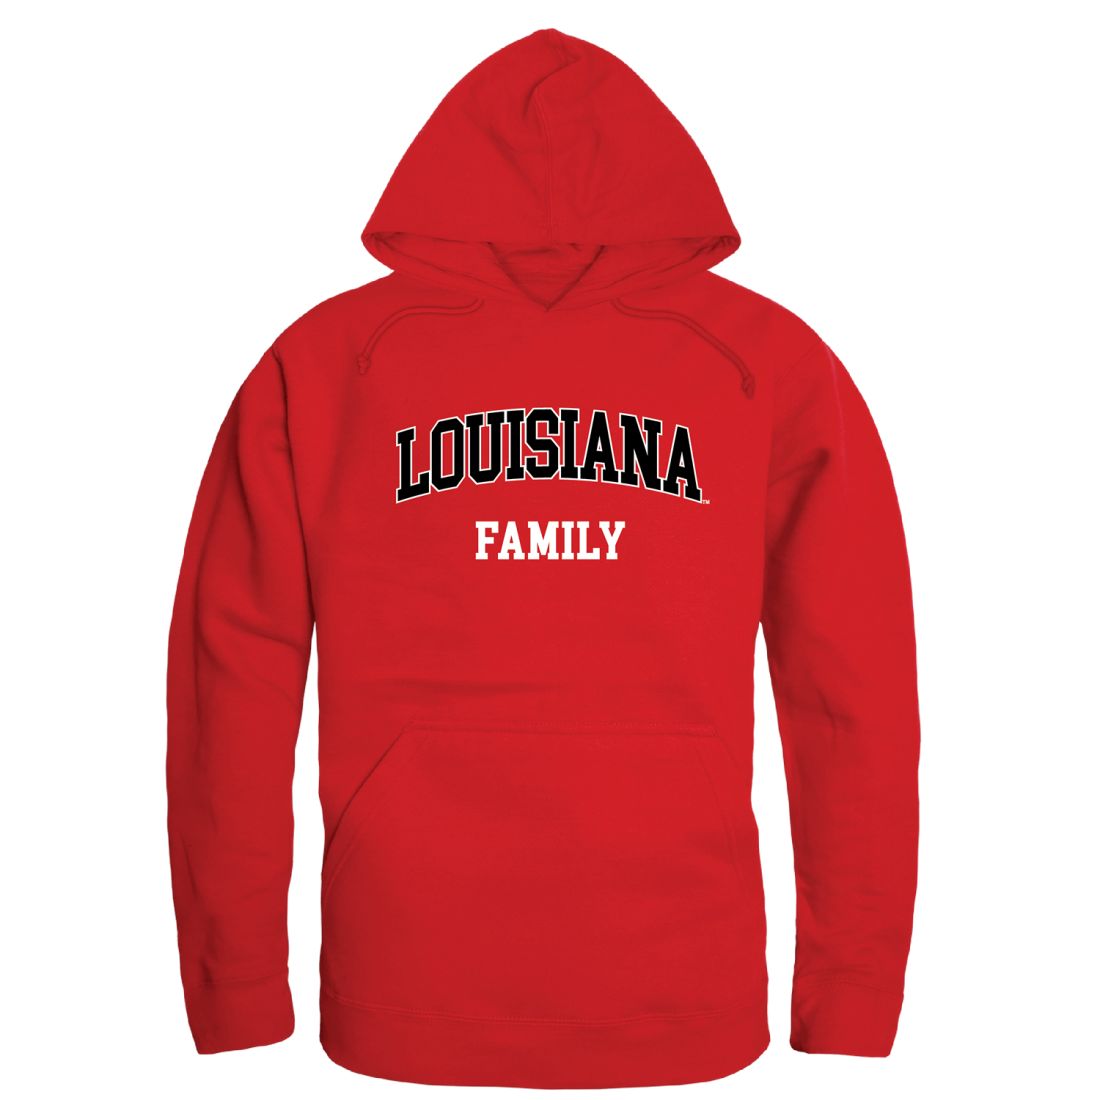 UL University of Louisiana at Lafayette Ragin' Cajuns Family Hoodie Sweatshirts